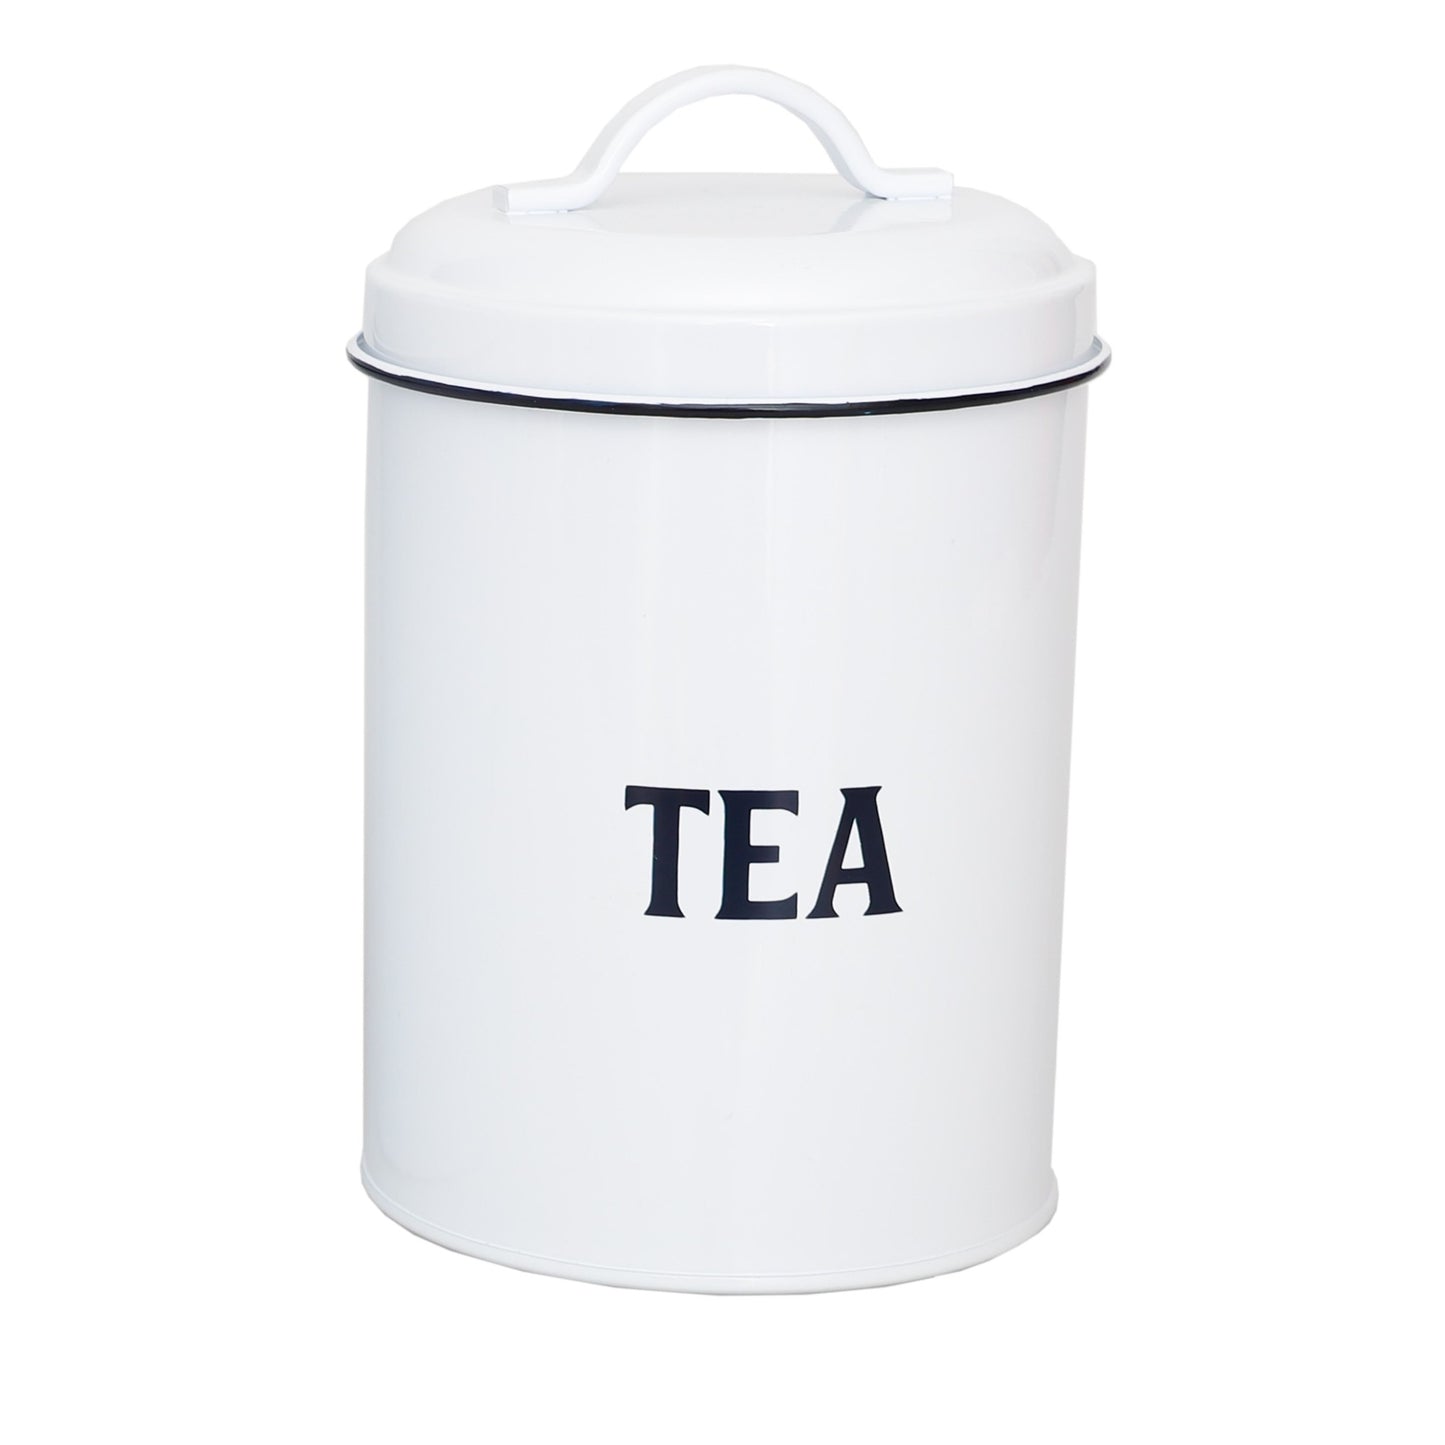 Home Basics Countryside Tea Tin Canister, White - Tea